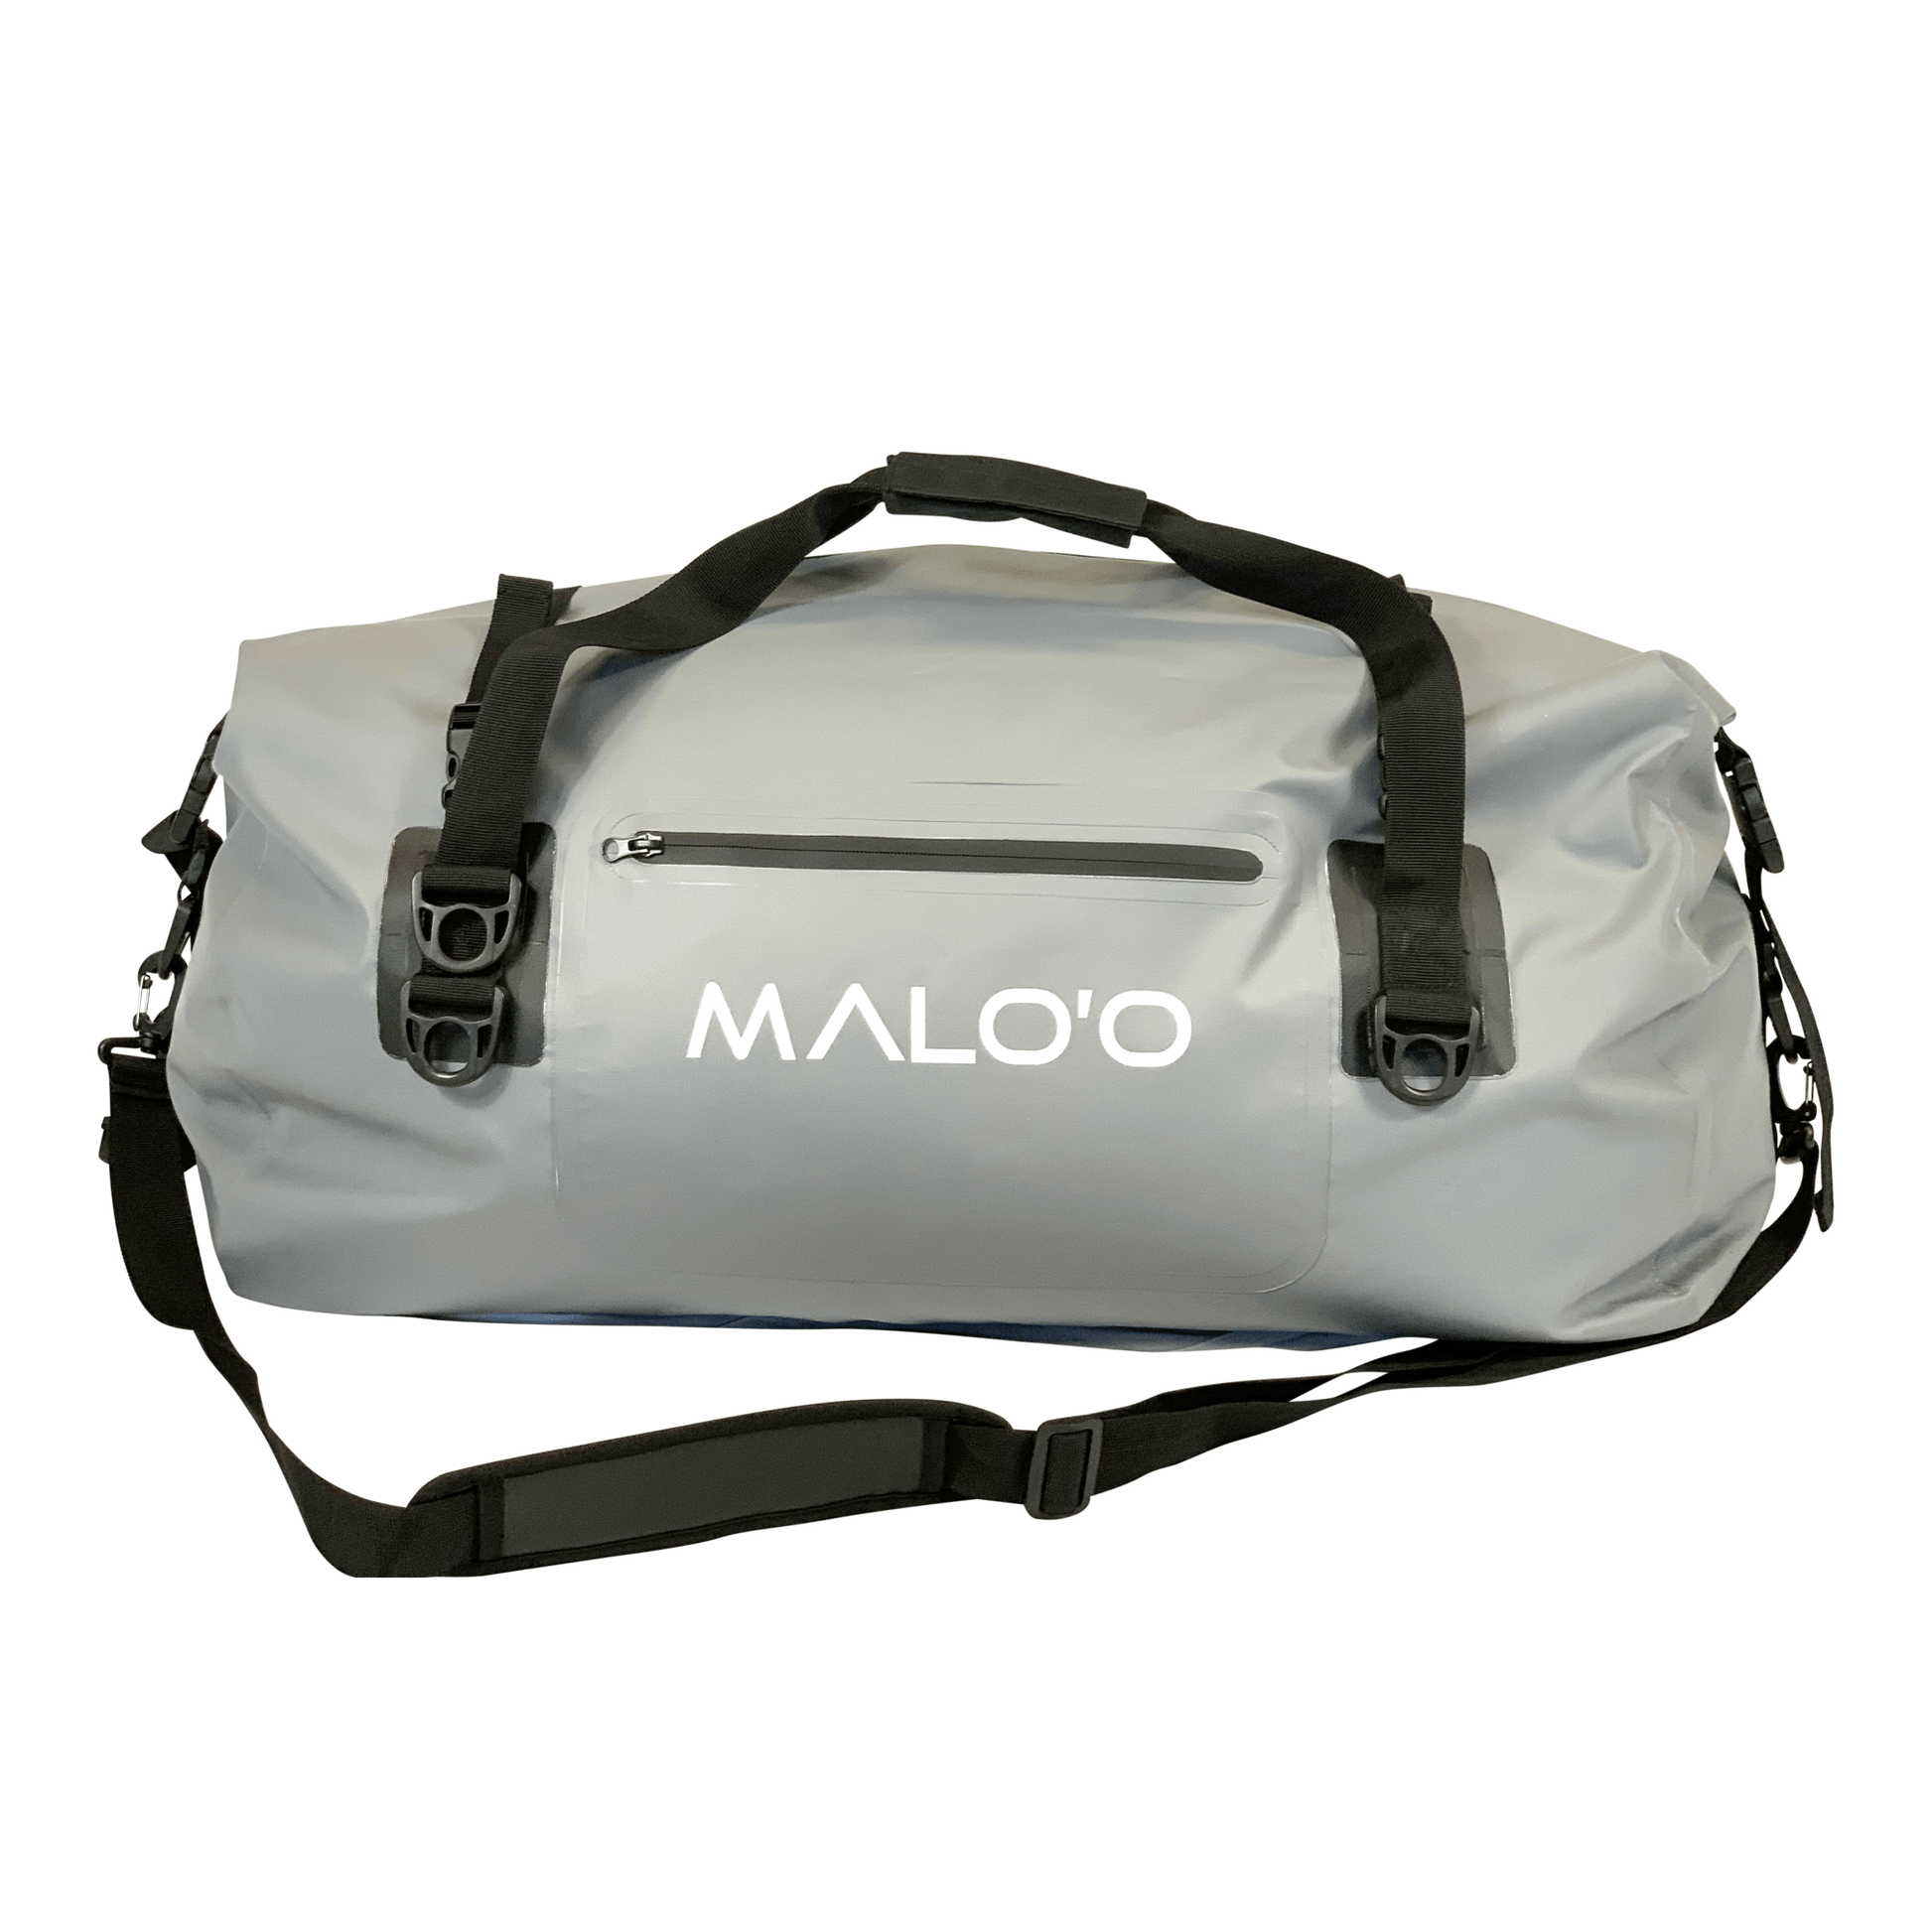 Malo'o Waterproof Dry Bag Duffel 40L/60L/100L, Roll Top Duffel Keeps Gear  Dry for Kayaking, Rafting, Boating, Swimming, Camping, Hiking, Beach